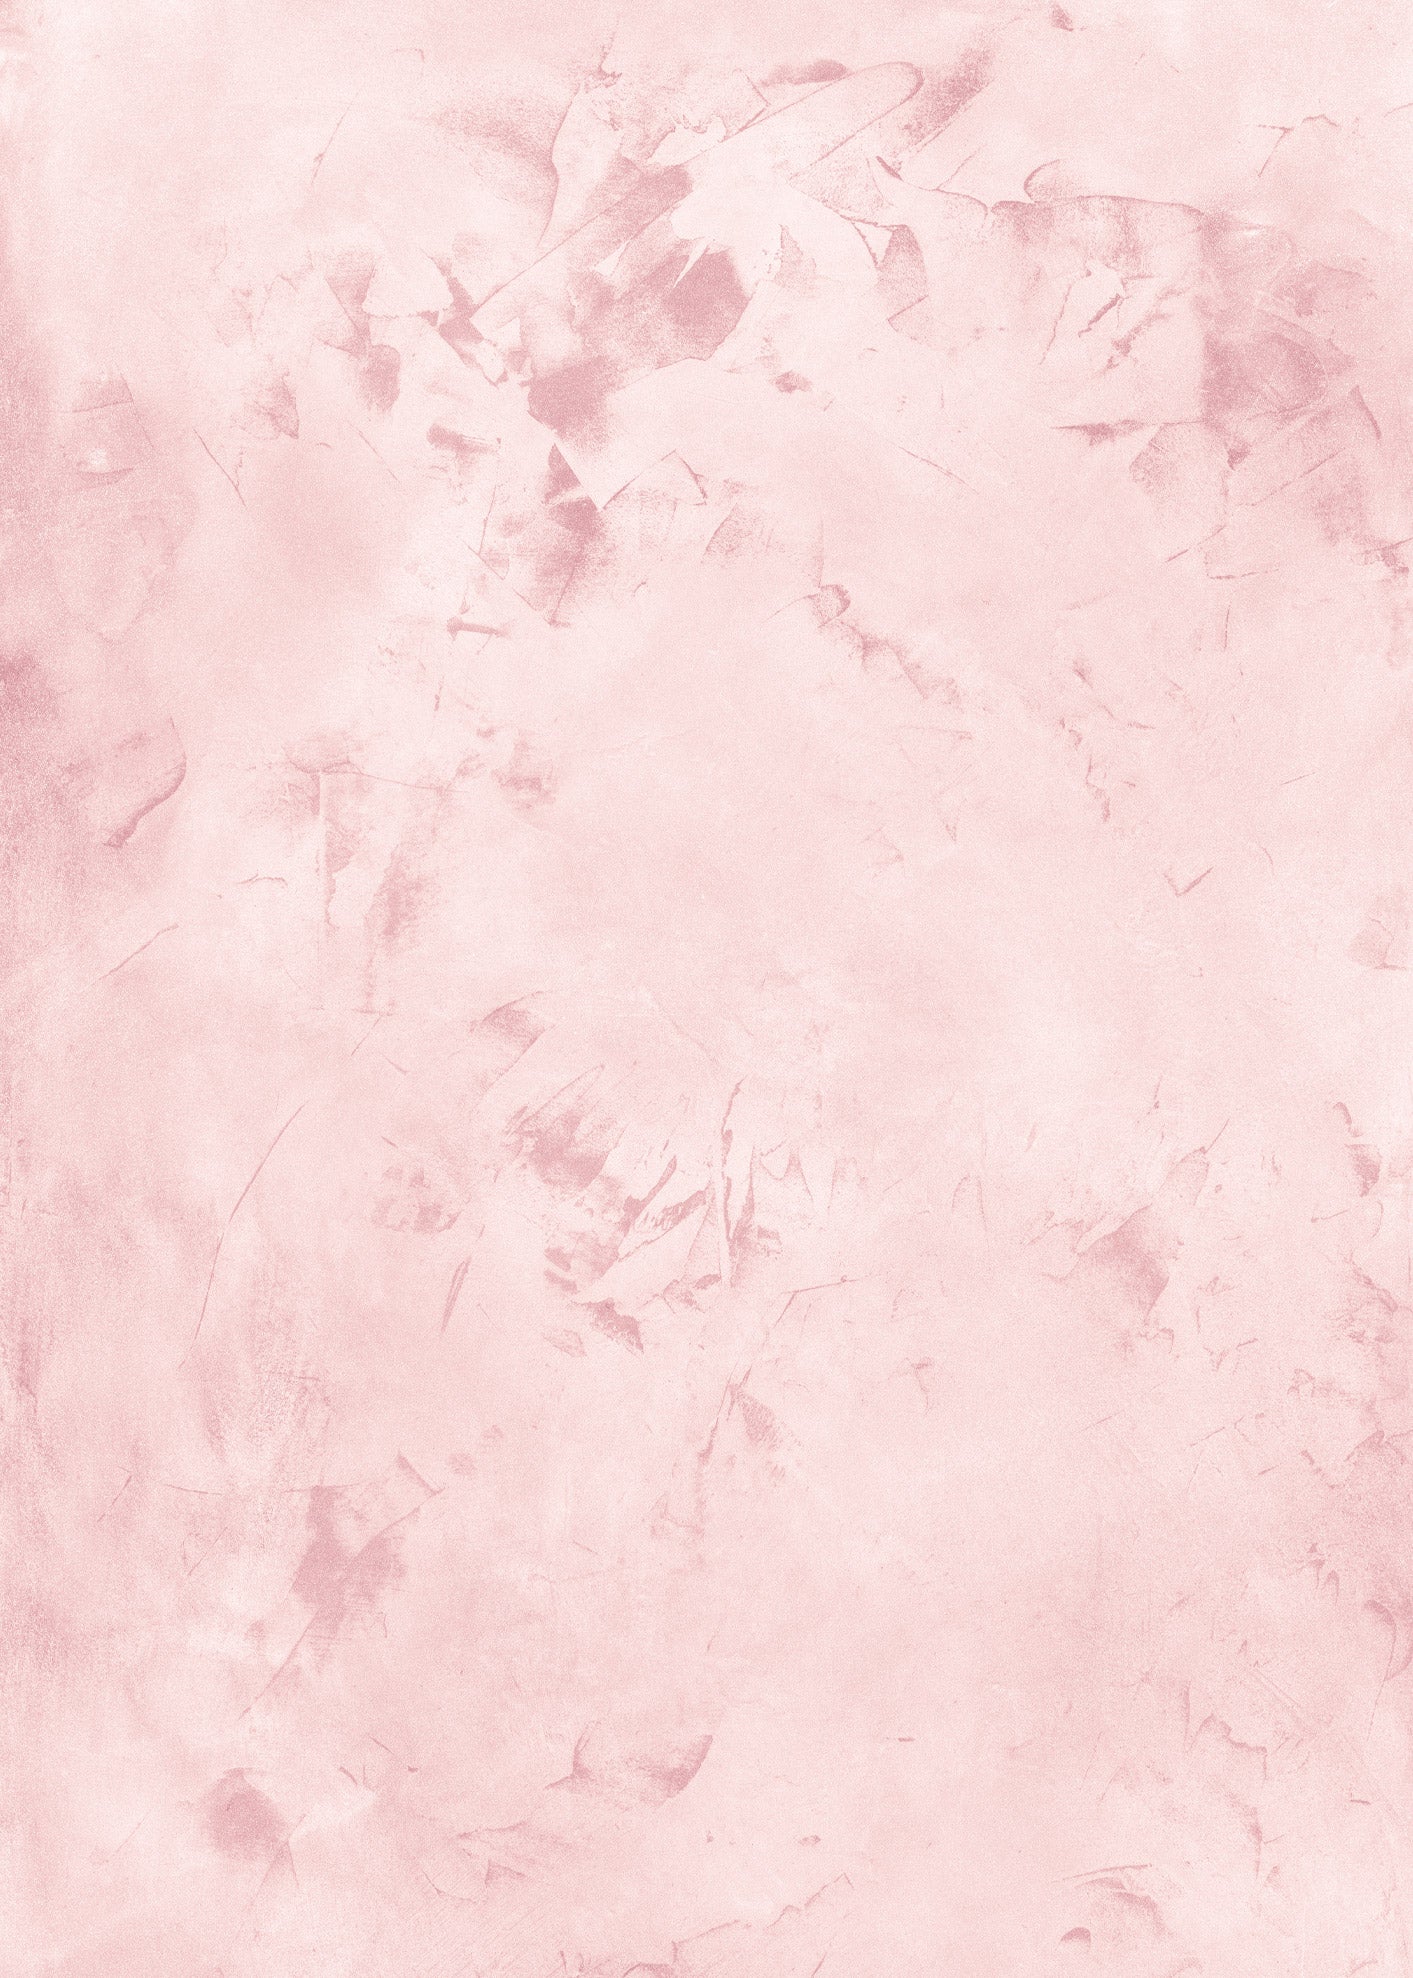 Light Pink Solid Photo Studio Backdrops